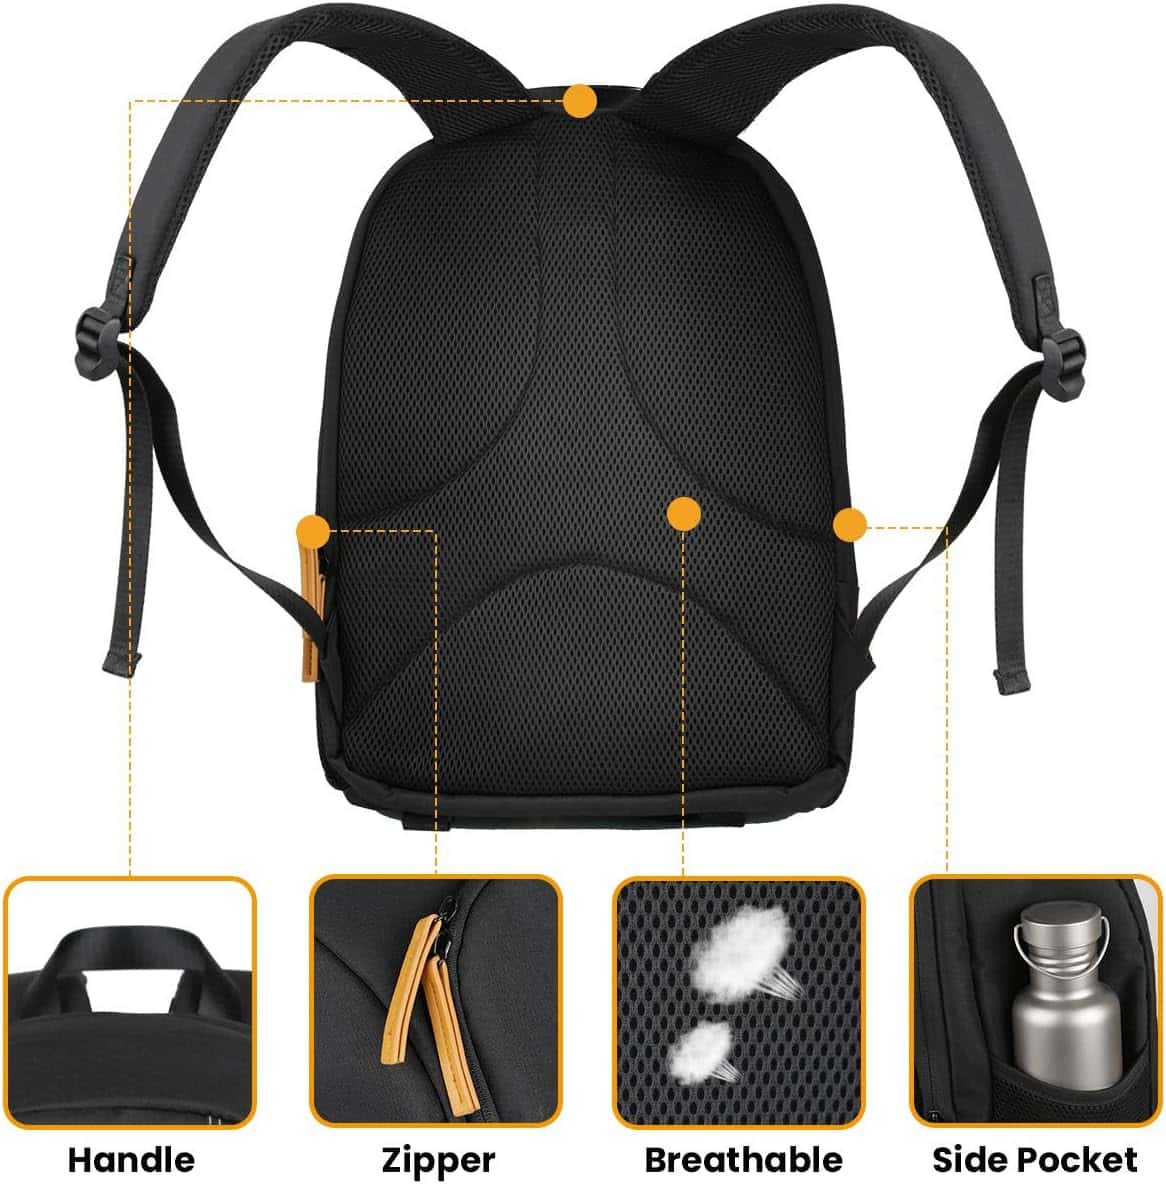 TARION Camera Backpack TB-02: The Ultimate Waterproof Camera Bag Review